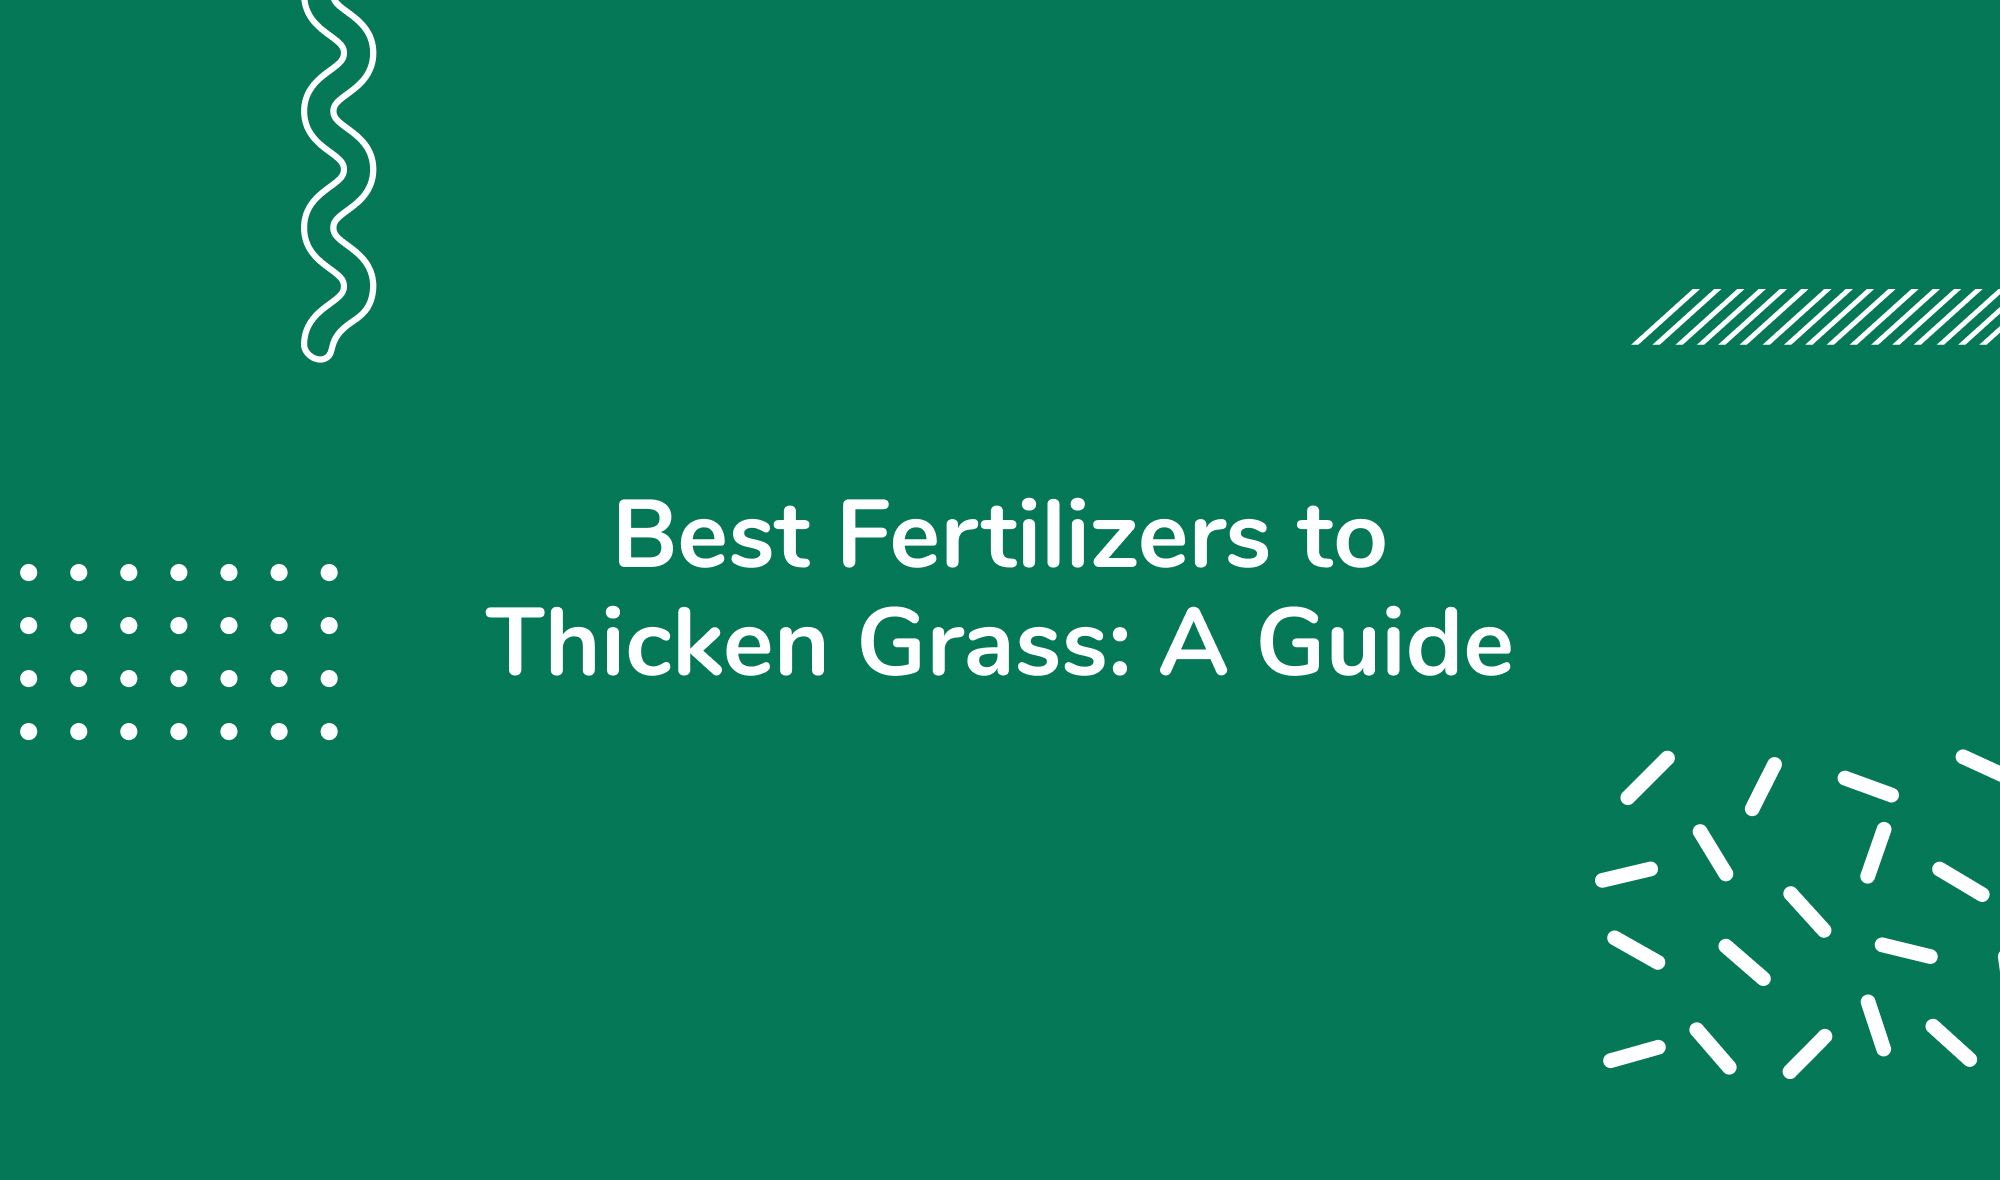 Best Fertilizers to Thicken Grass: A Guide